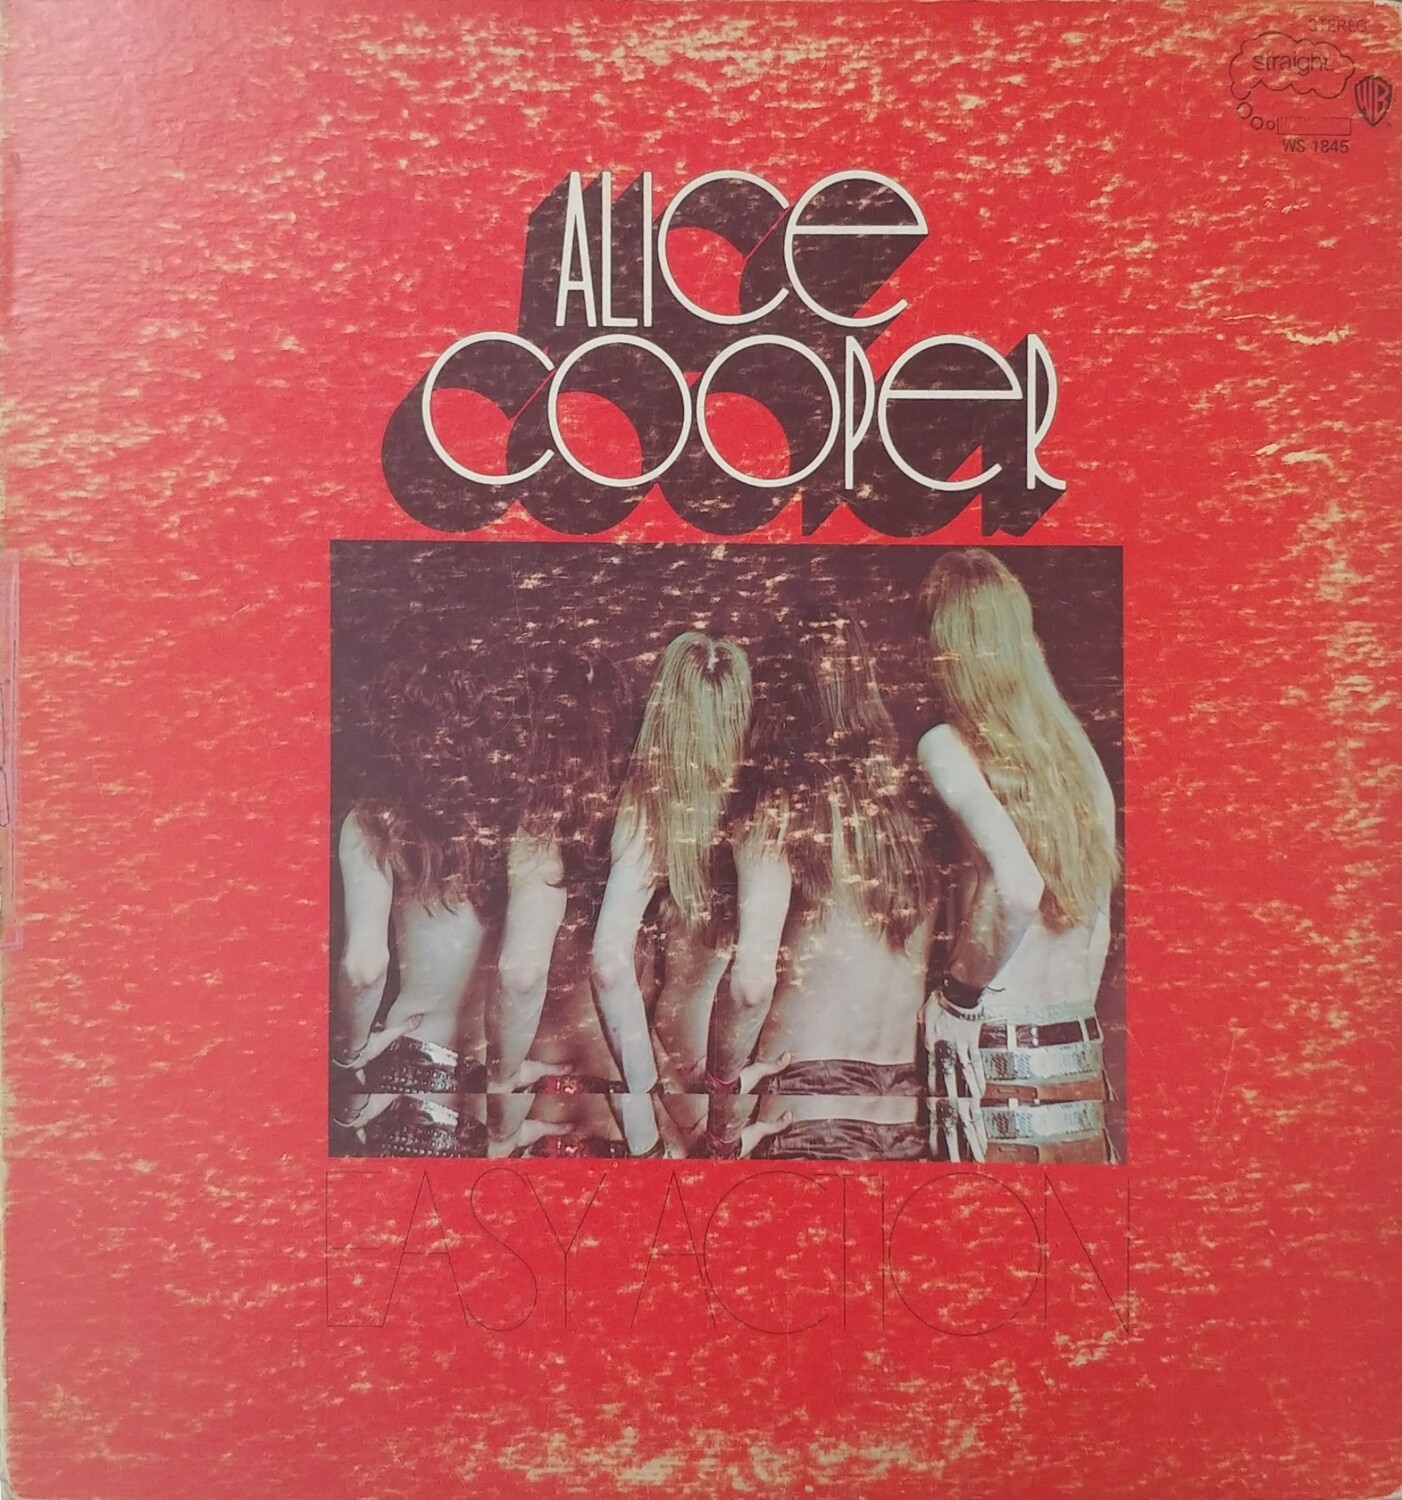 Alice Cooper - Easy action